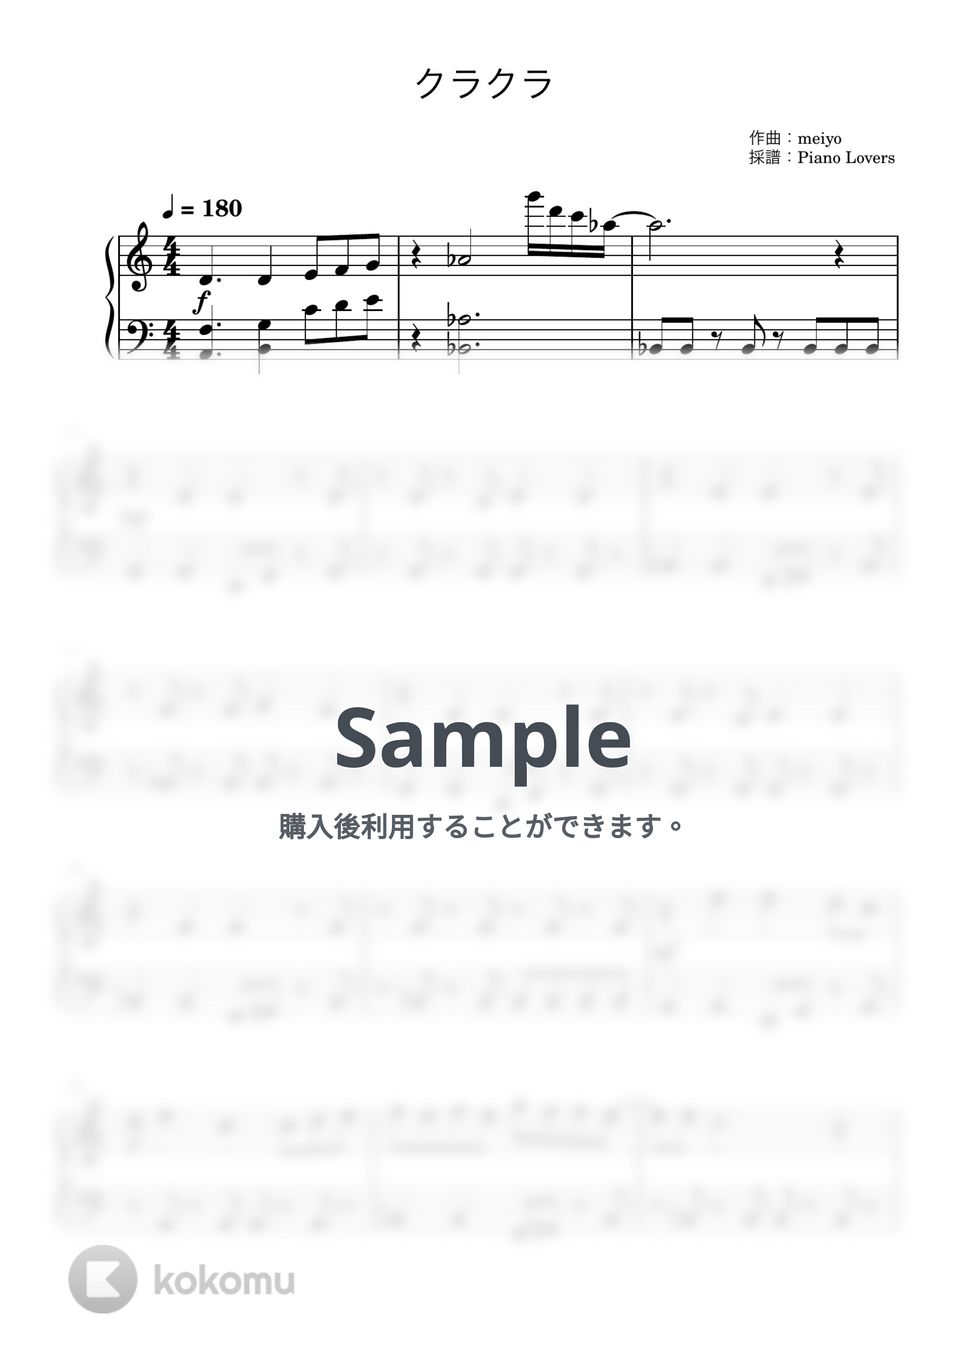 Ado - クラクラ (SPY×FAMILY / ピアノ楽譜 / 初級) by Piano Lovers. jp